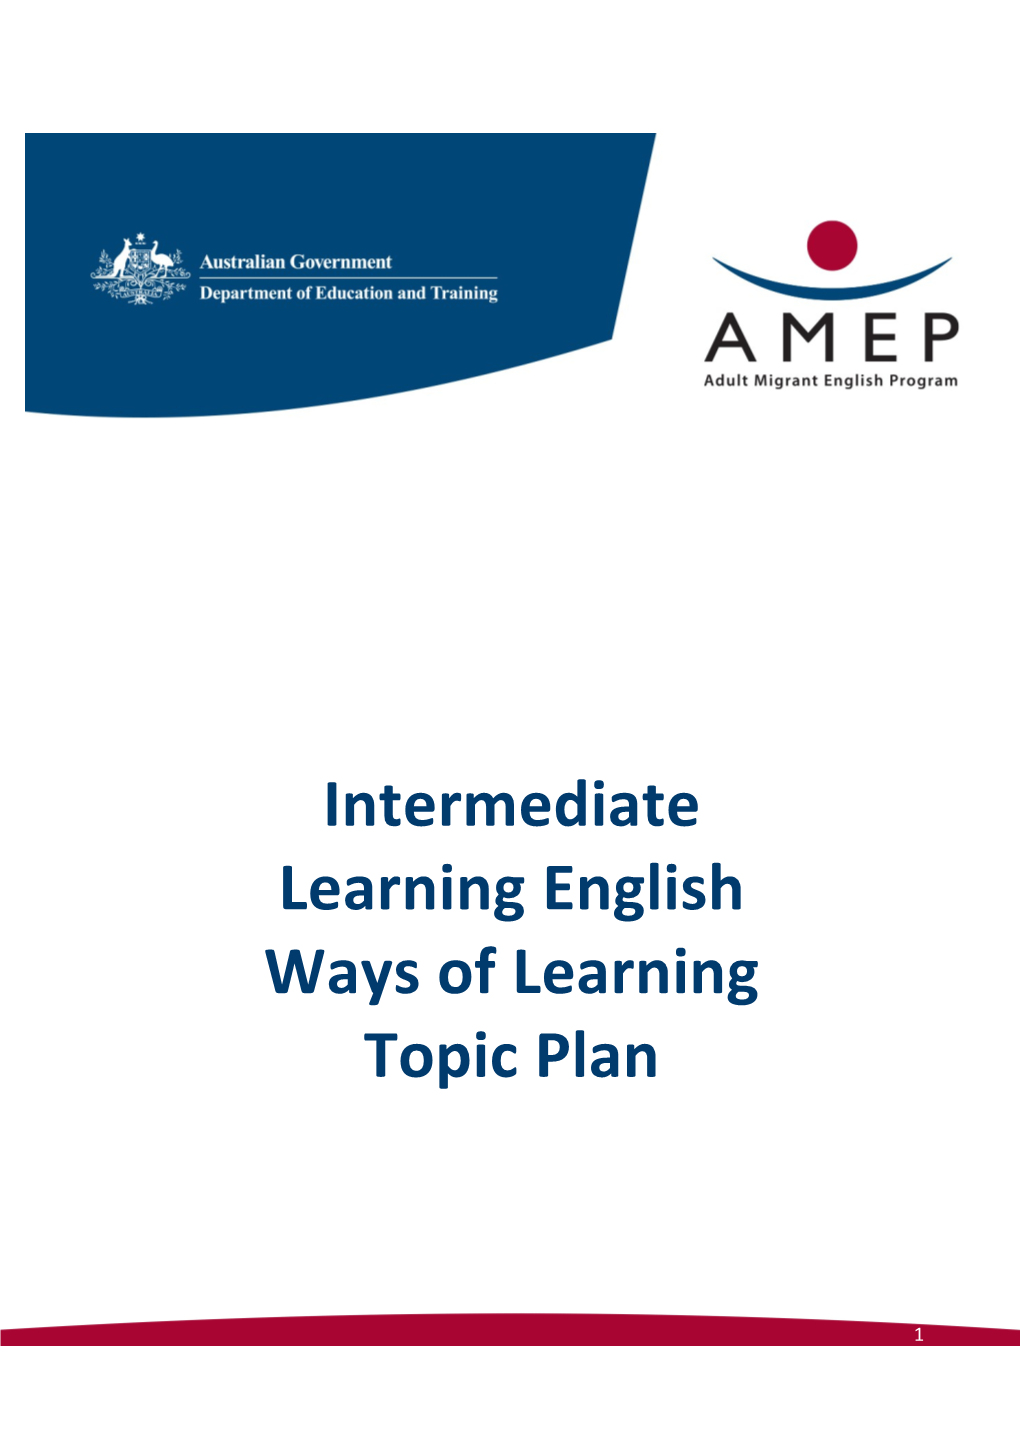 Intermediate Learning English Ways of Learning Topic Plan